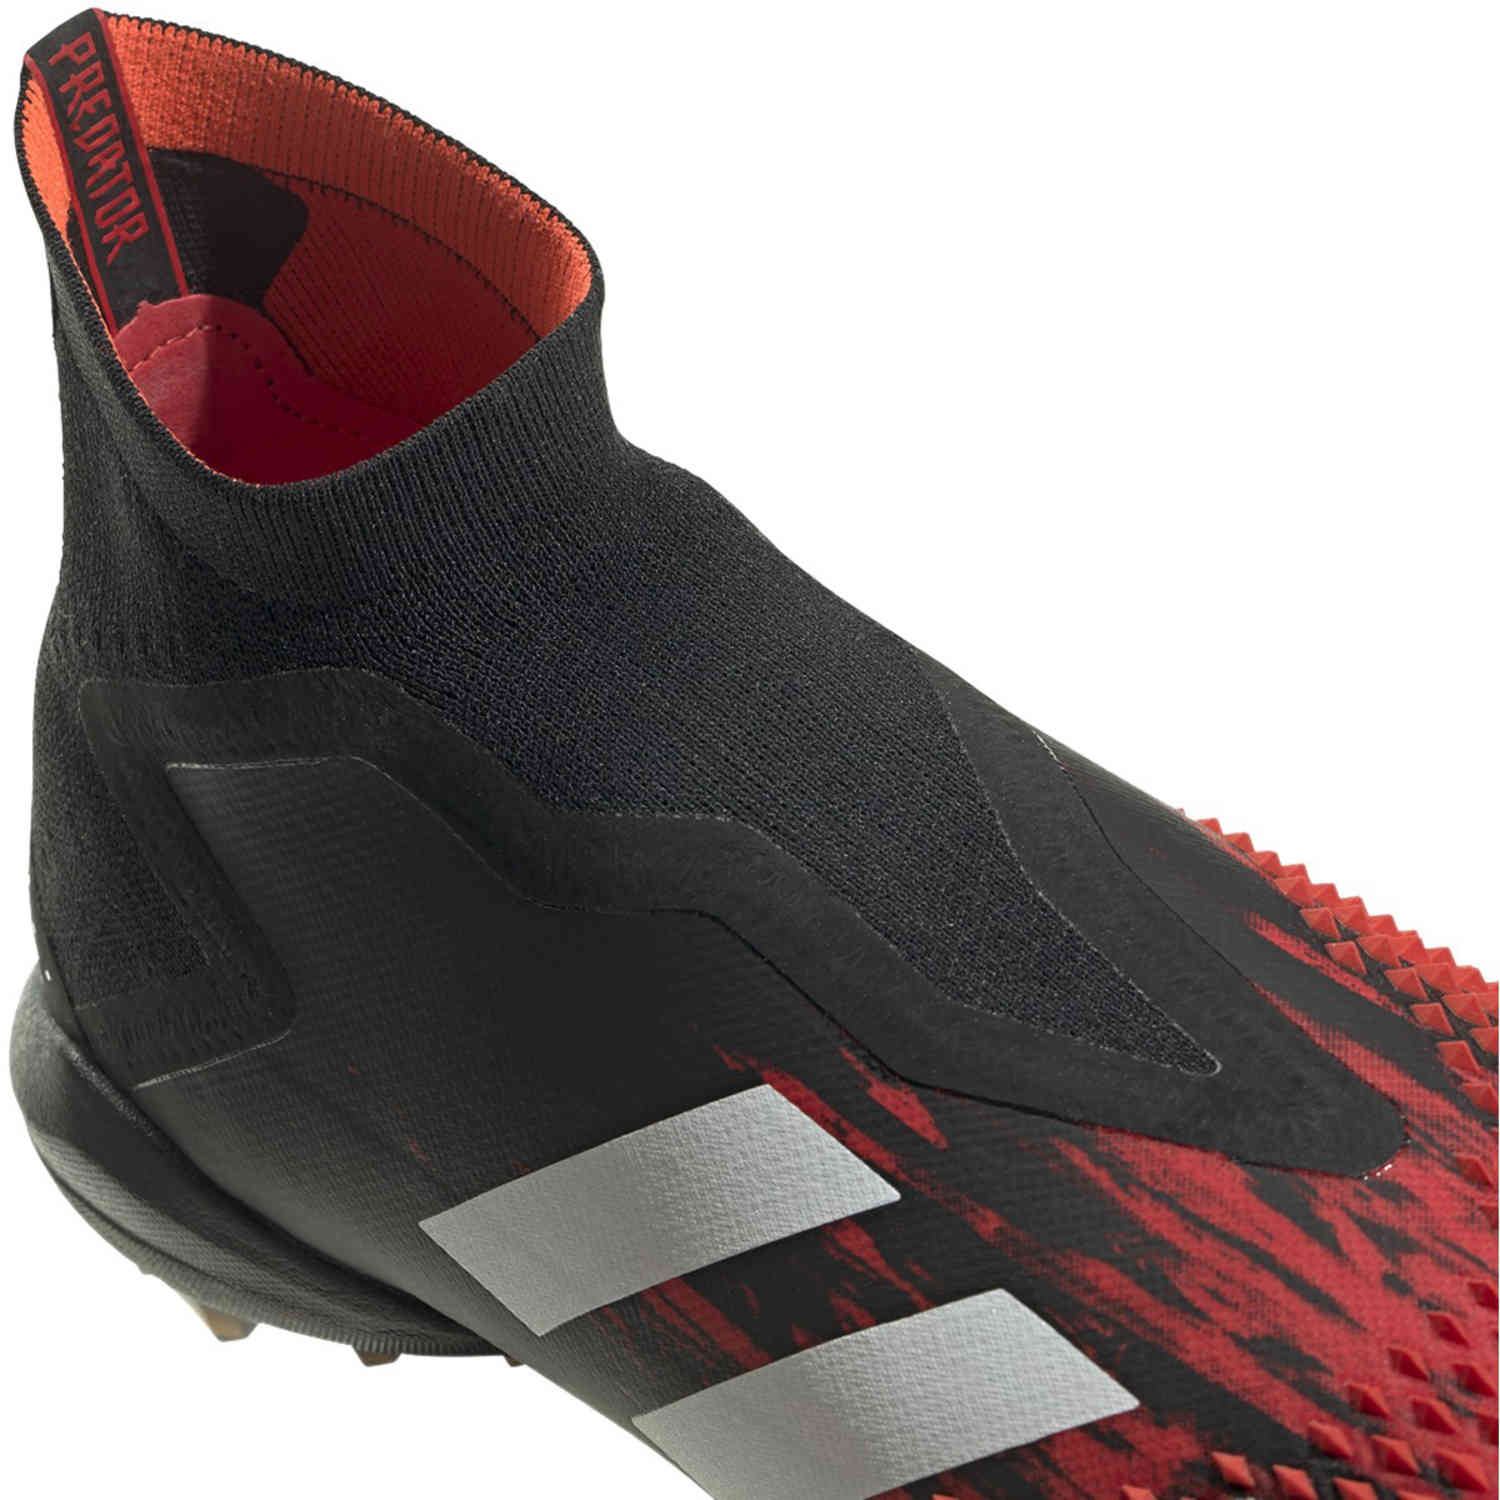 Adidas Predator 20.3 IN Indoor Boots R GOL.com Football.